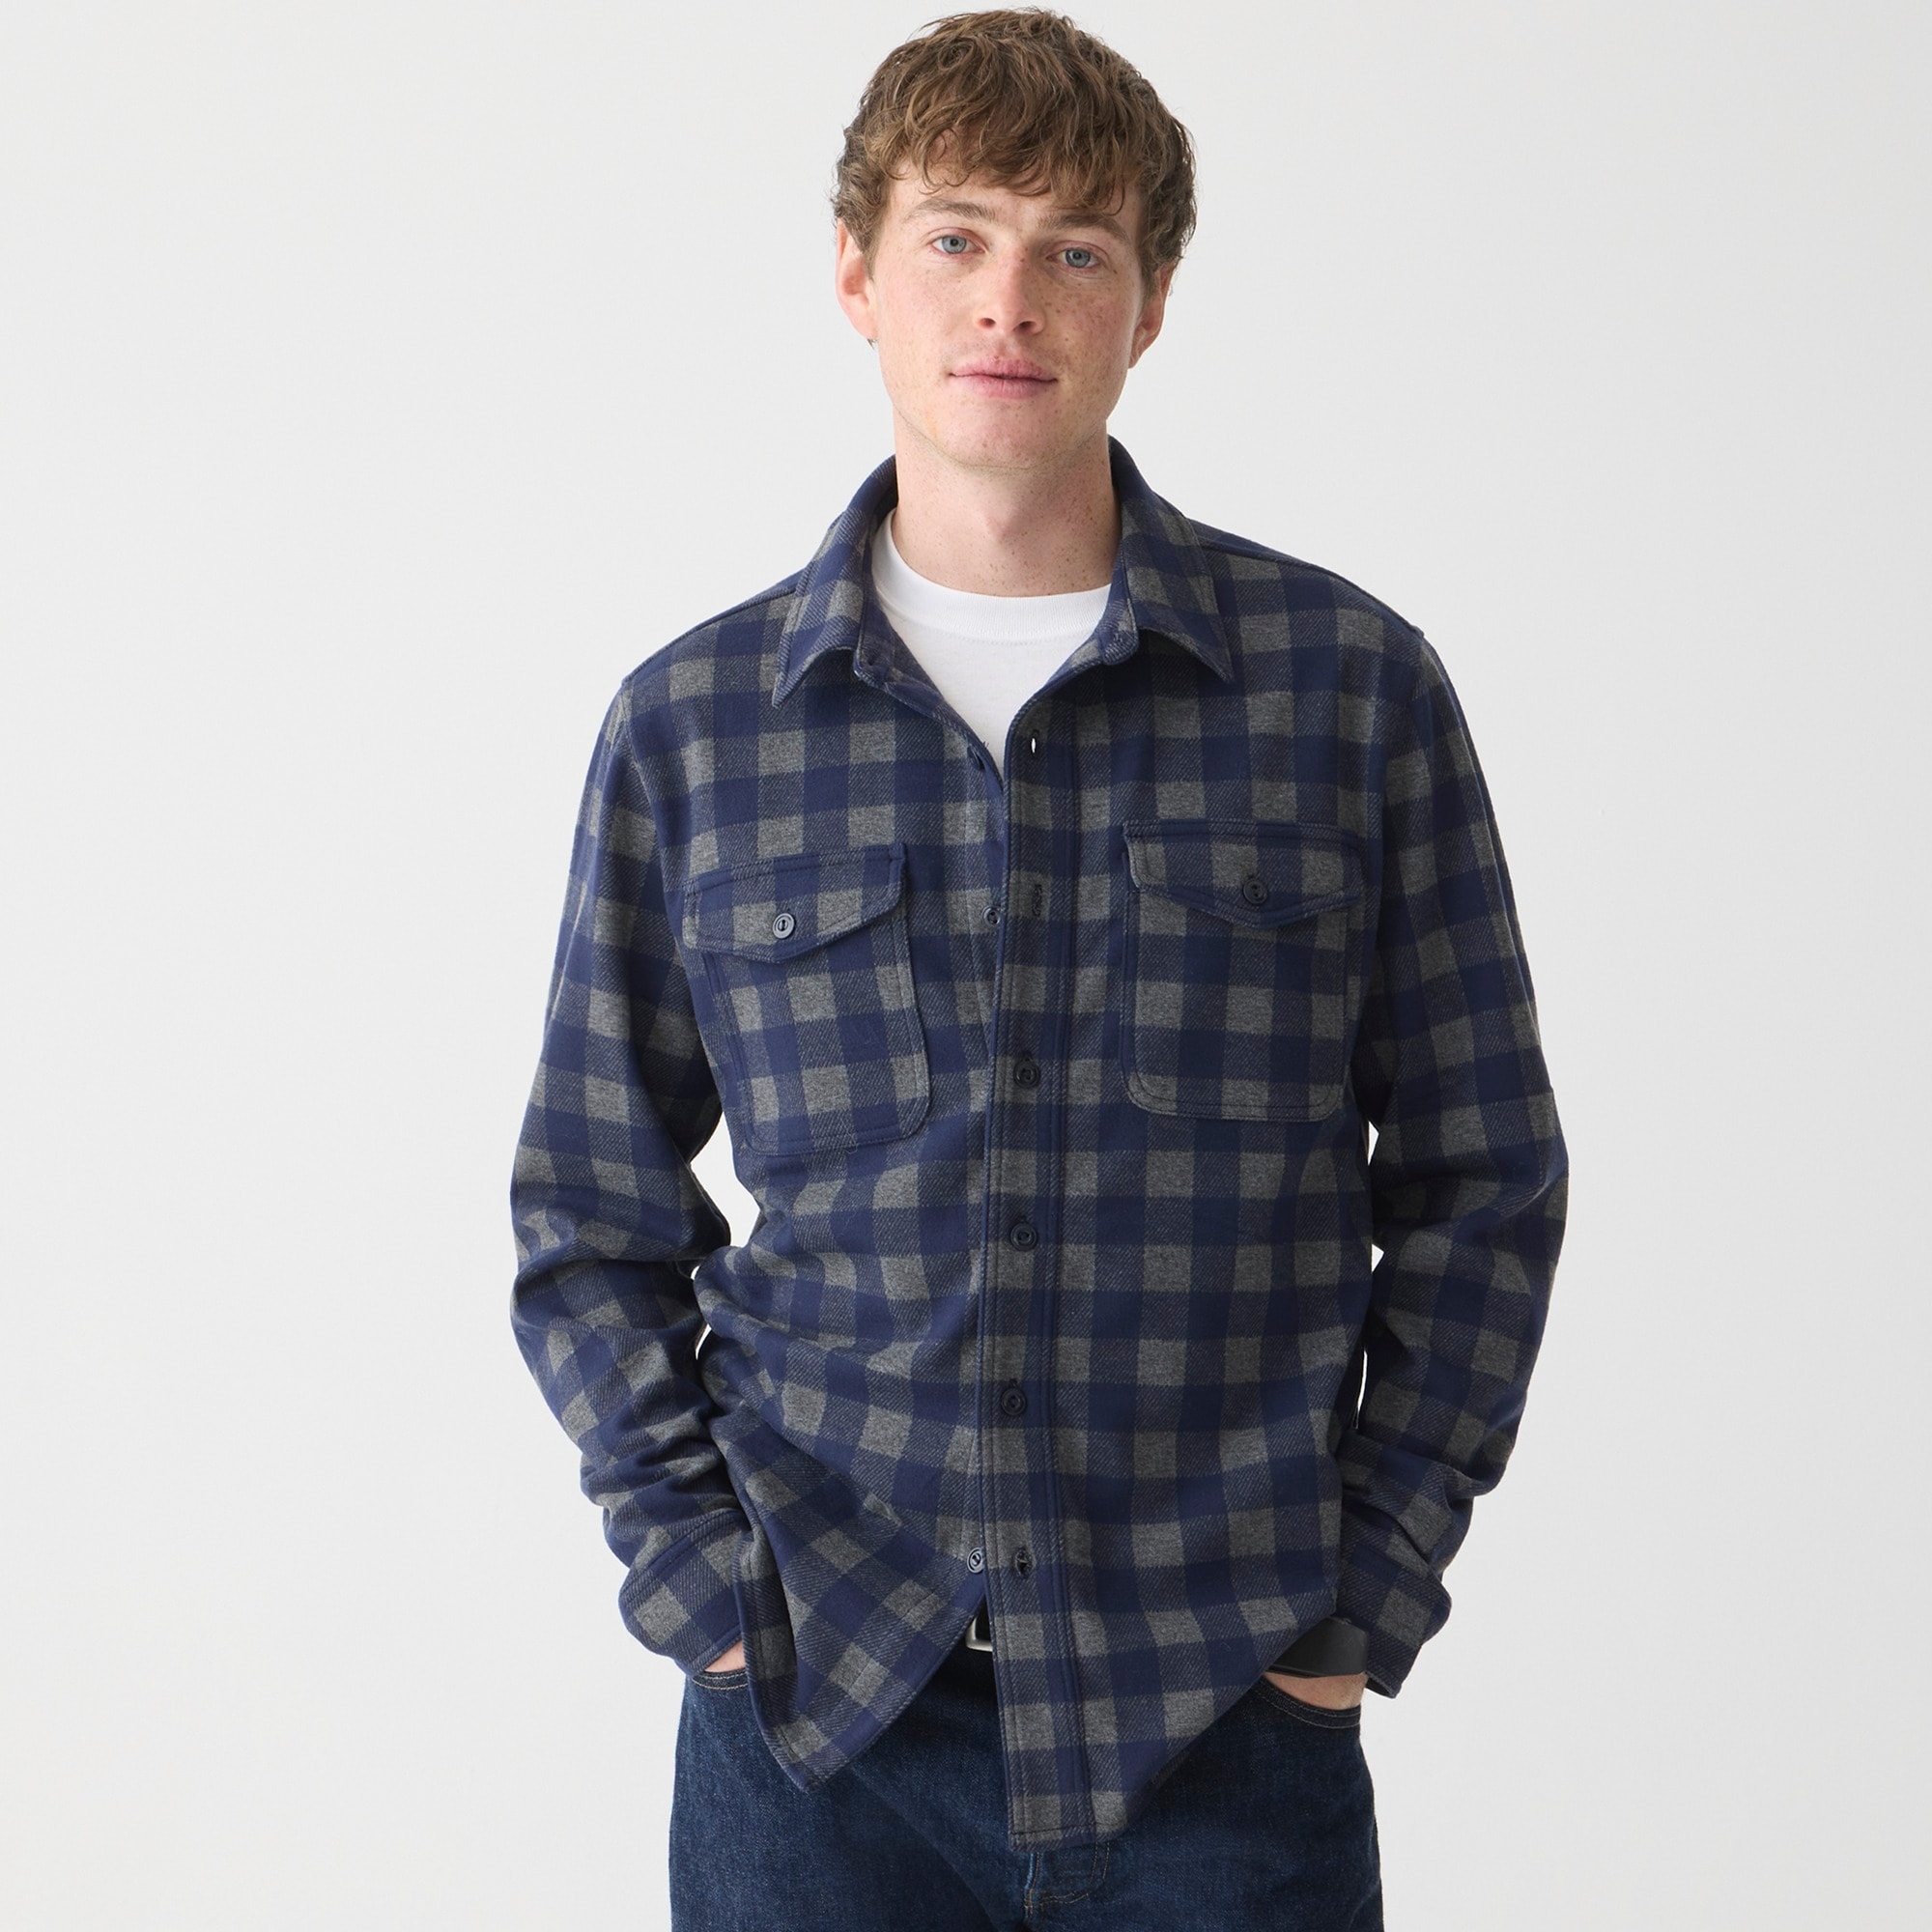  Seaboard soft-knit shirt in plaid